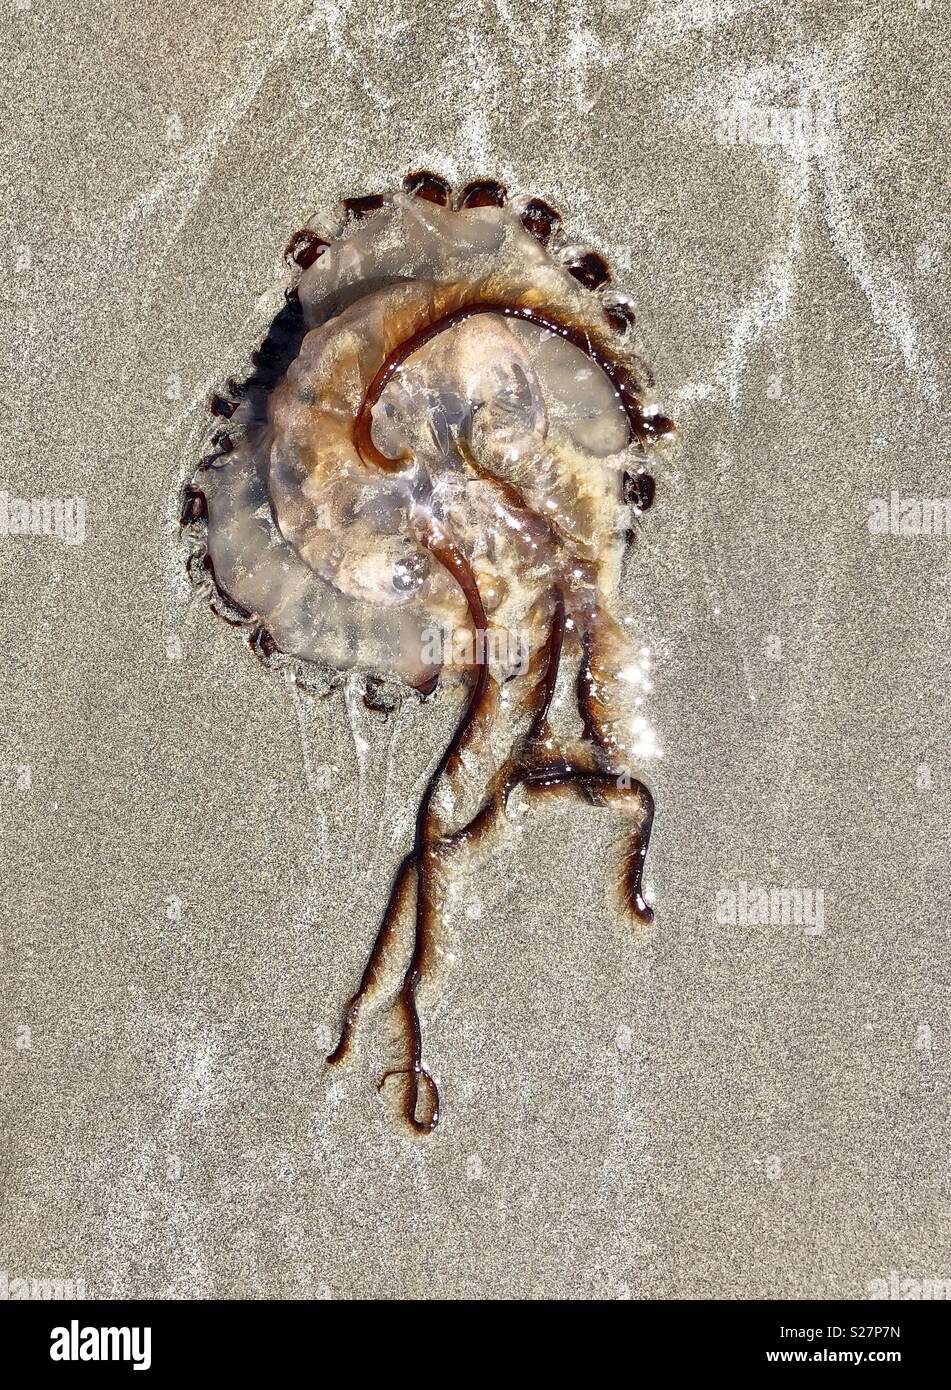 Compass Jellyfish (Chrysaora hysoscella - latin) on the sandy Rosess Point beach in County Sligo Ireland Stock Photo